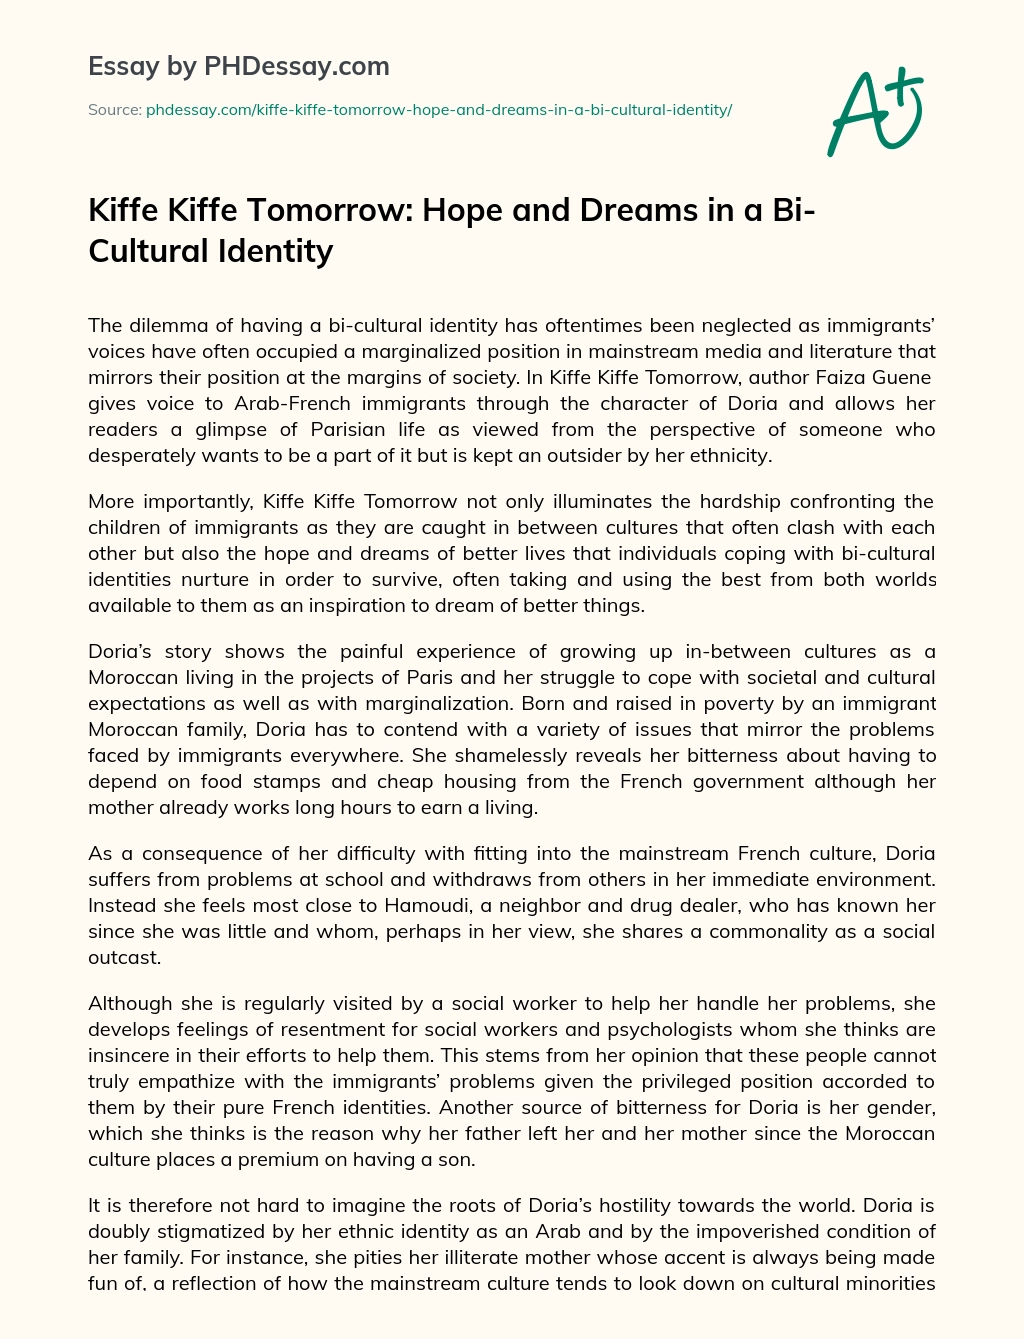 Kiffe Kiffe Tomorrow: Hope and Dreams in a Bi-Cultural Identity essay